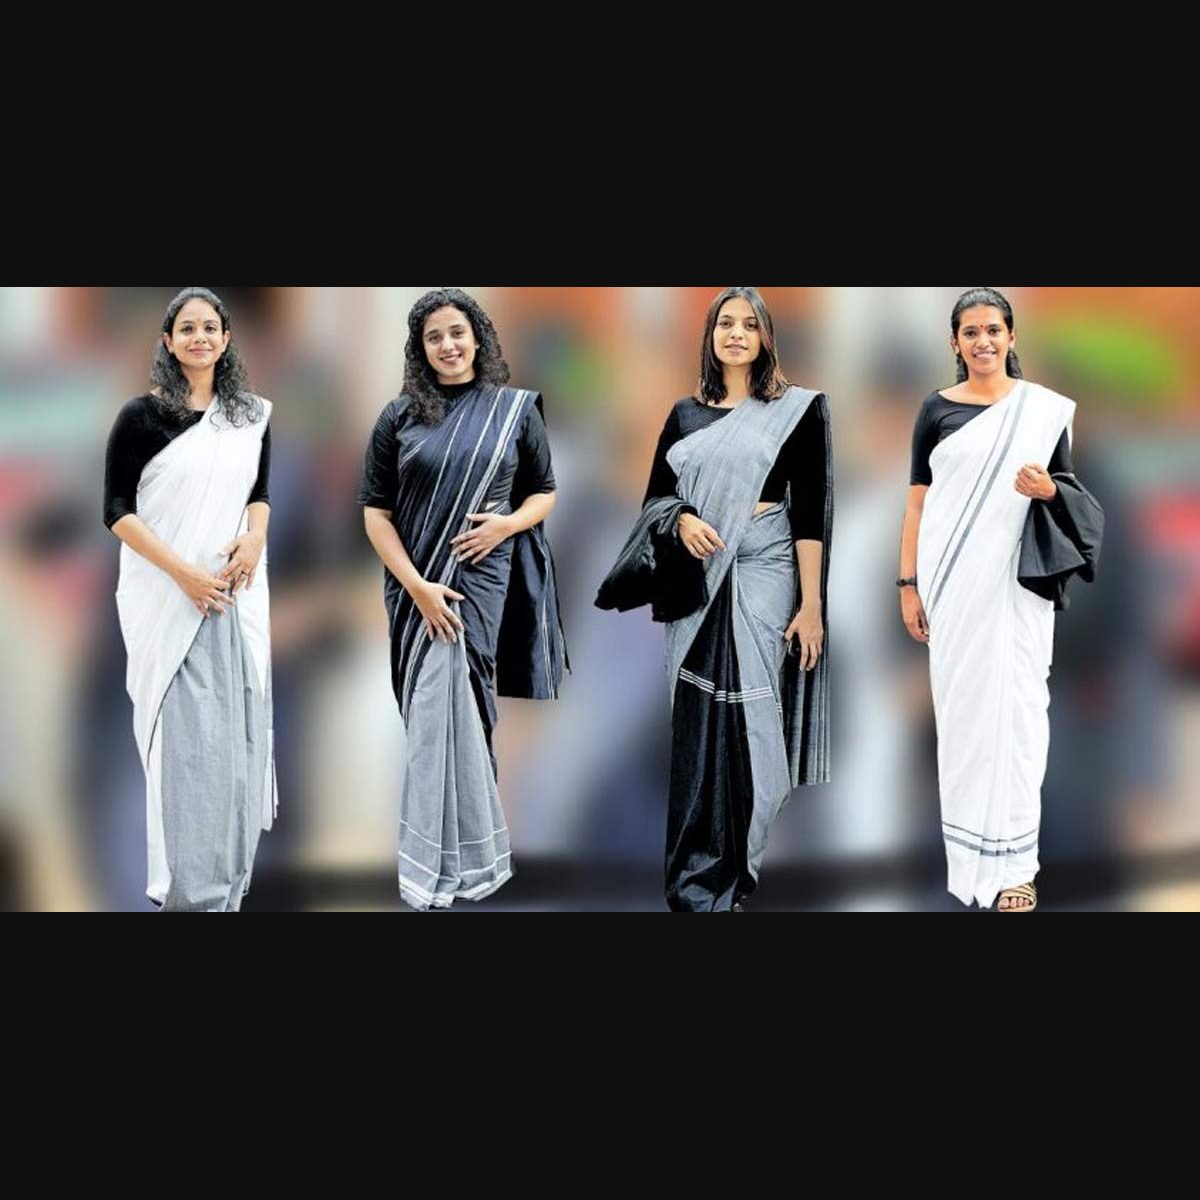 Photos: Kerala's Chamayamvilakku festival - Men dress up as women for  unique ritual | Thiruvananthapuram News - Times of India